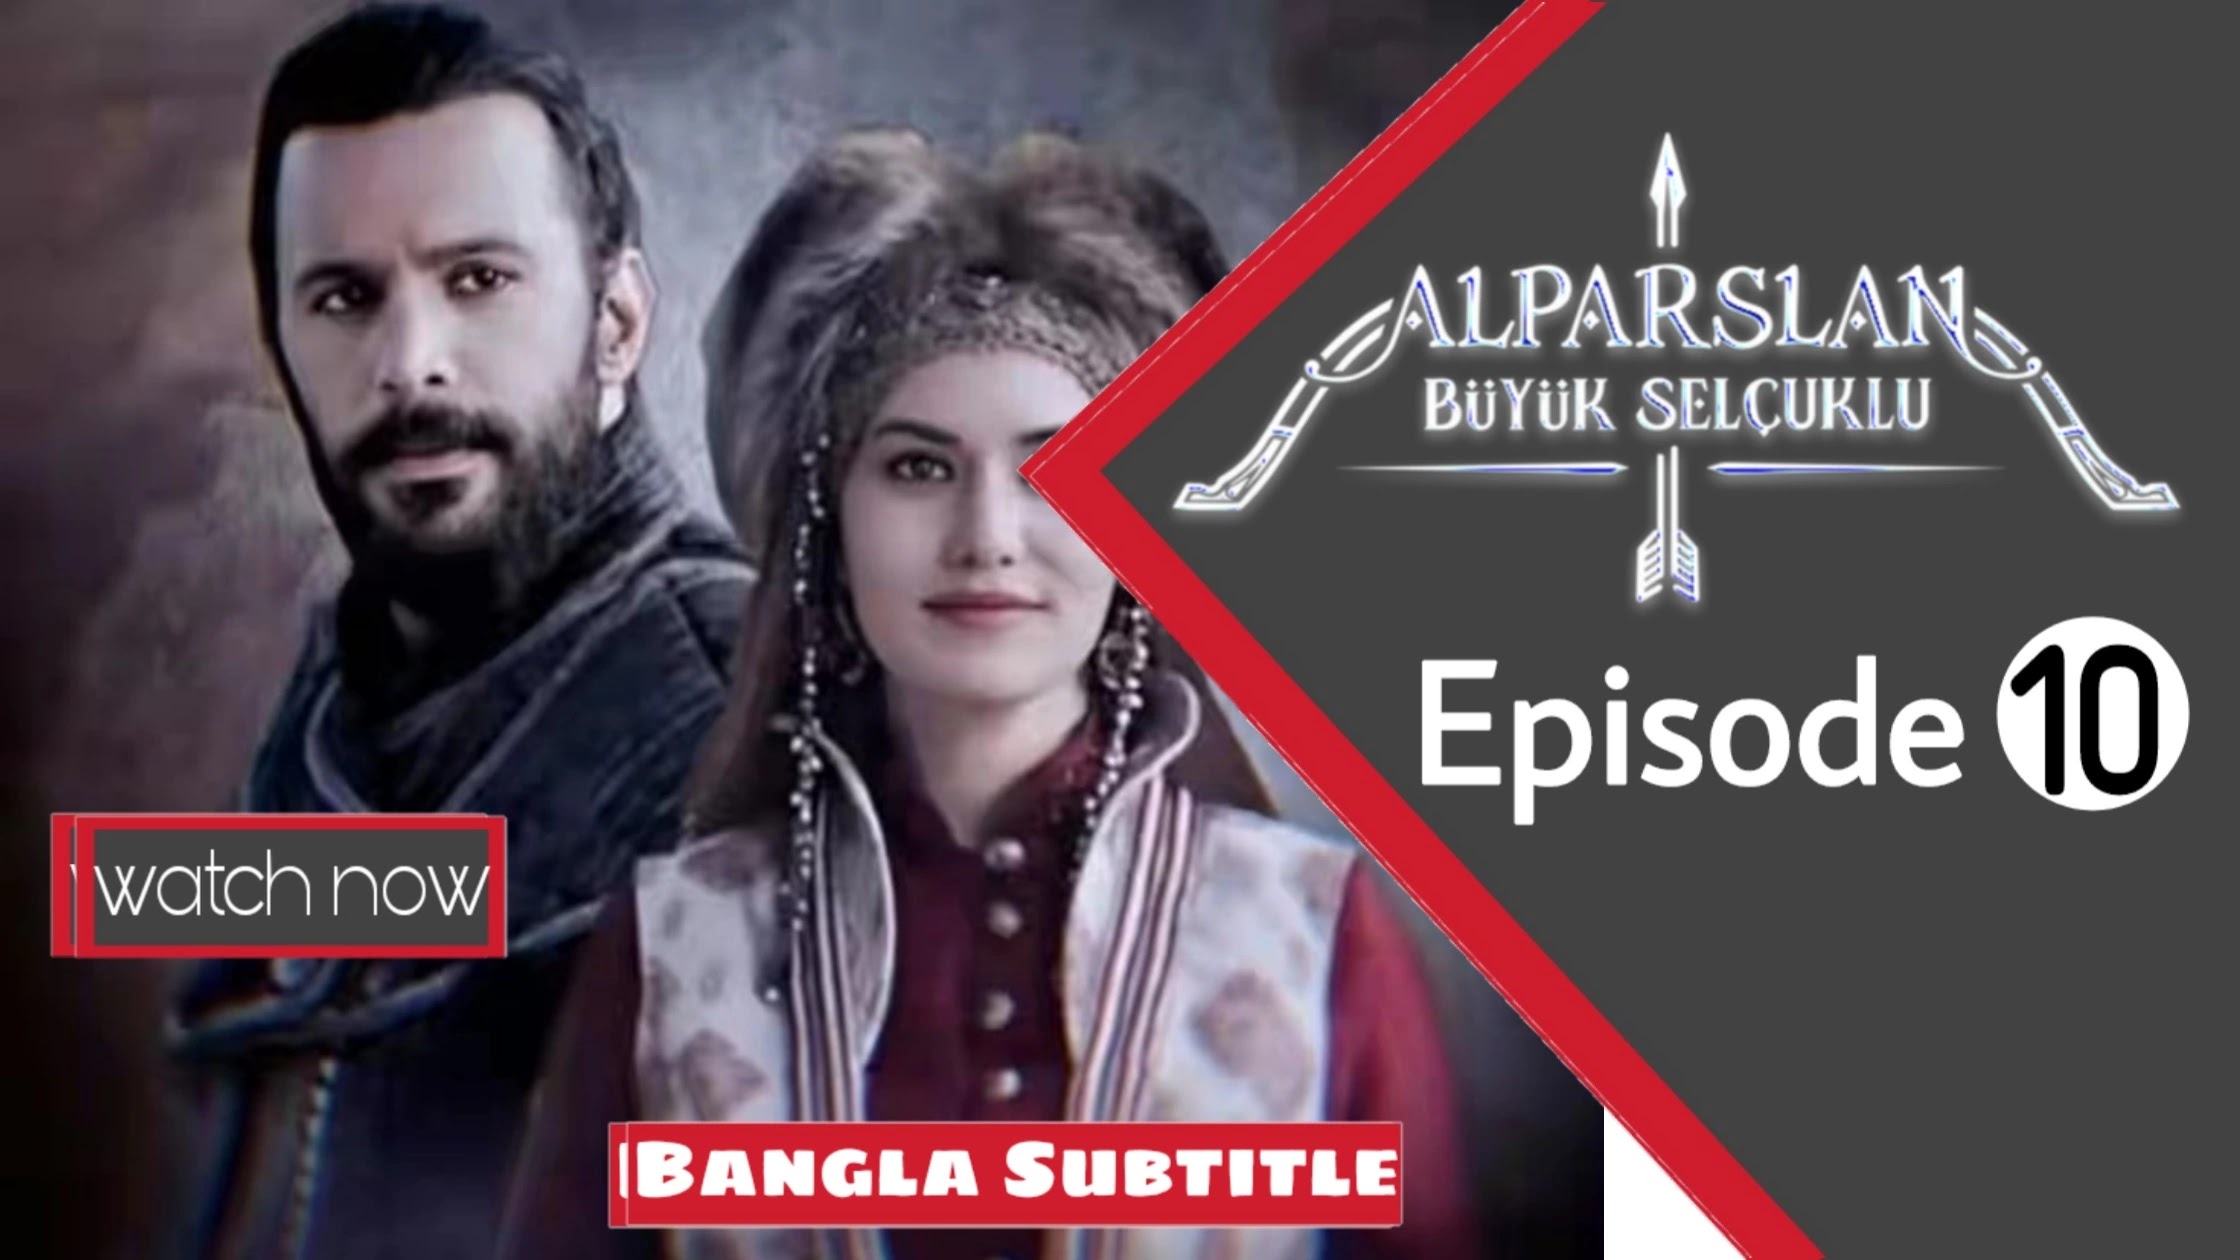 Alparslan Buyuk Selcuklu Episode 10 Bangla Subtitle